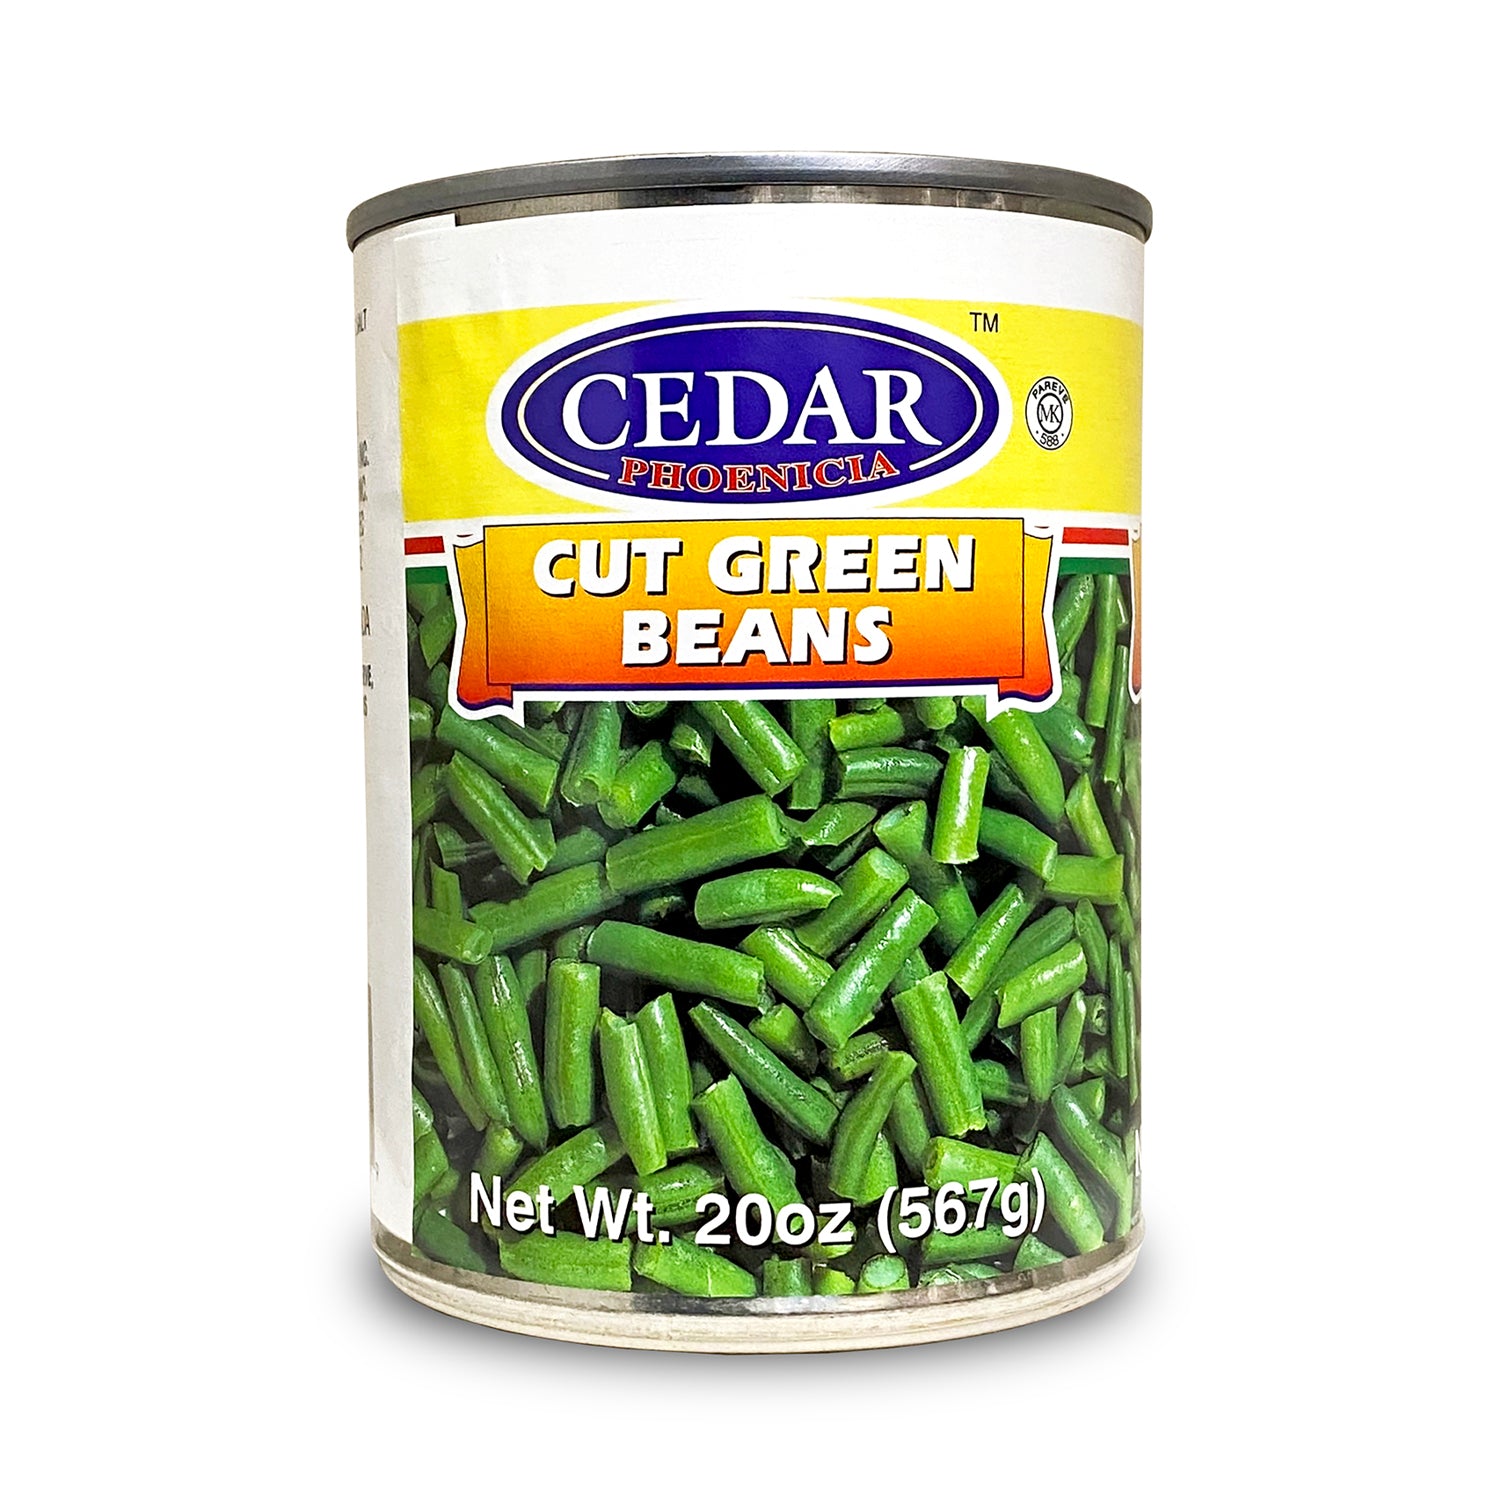 CEDAR CUT GREEN BEANS